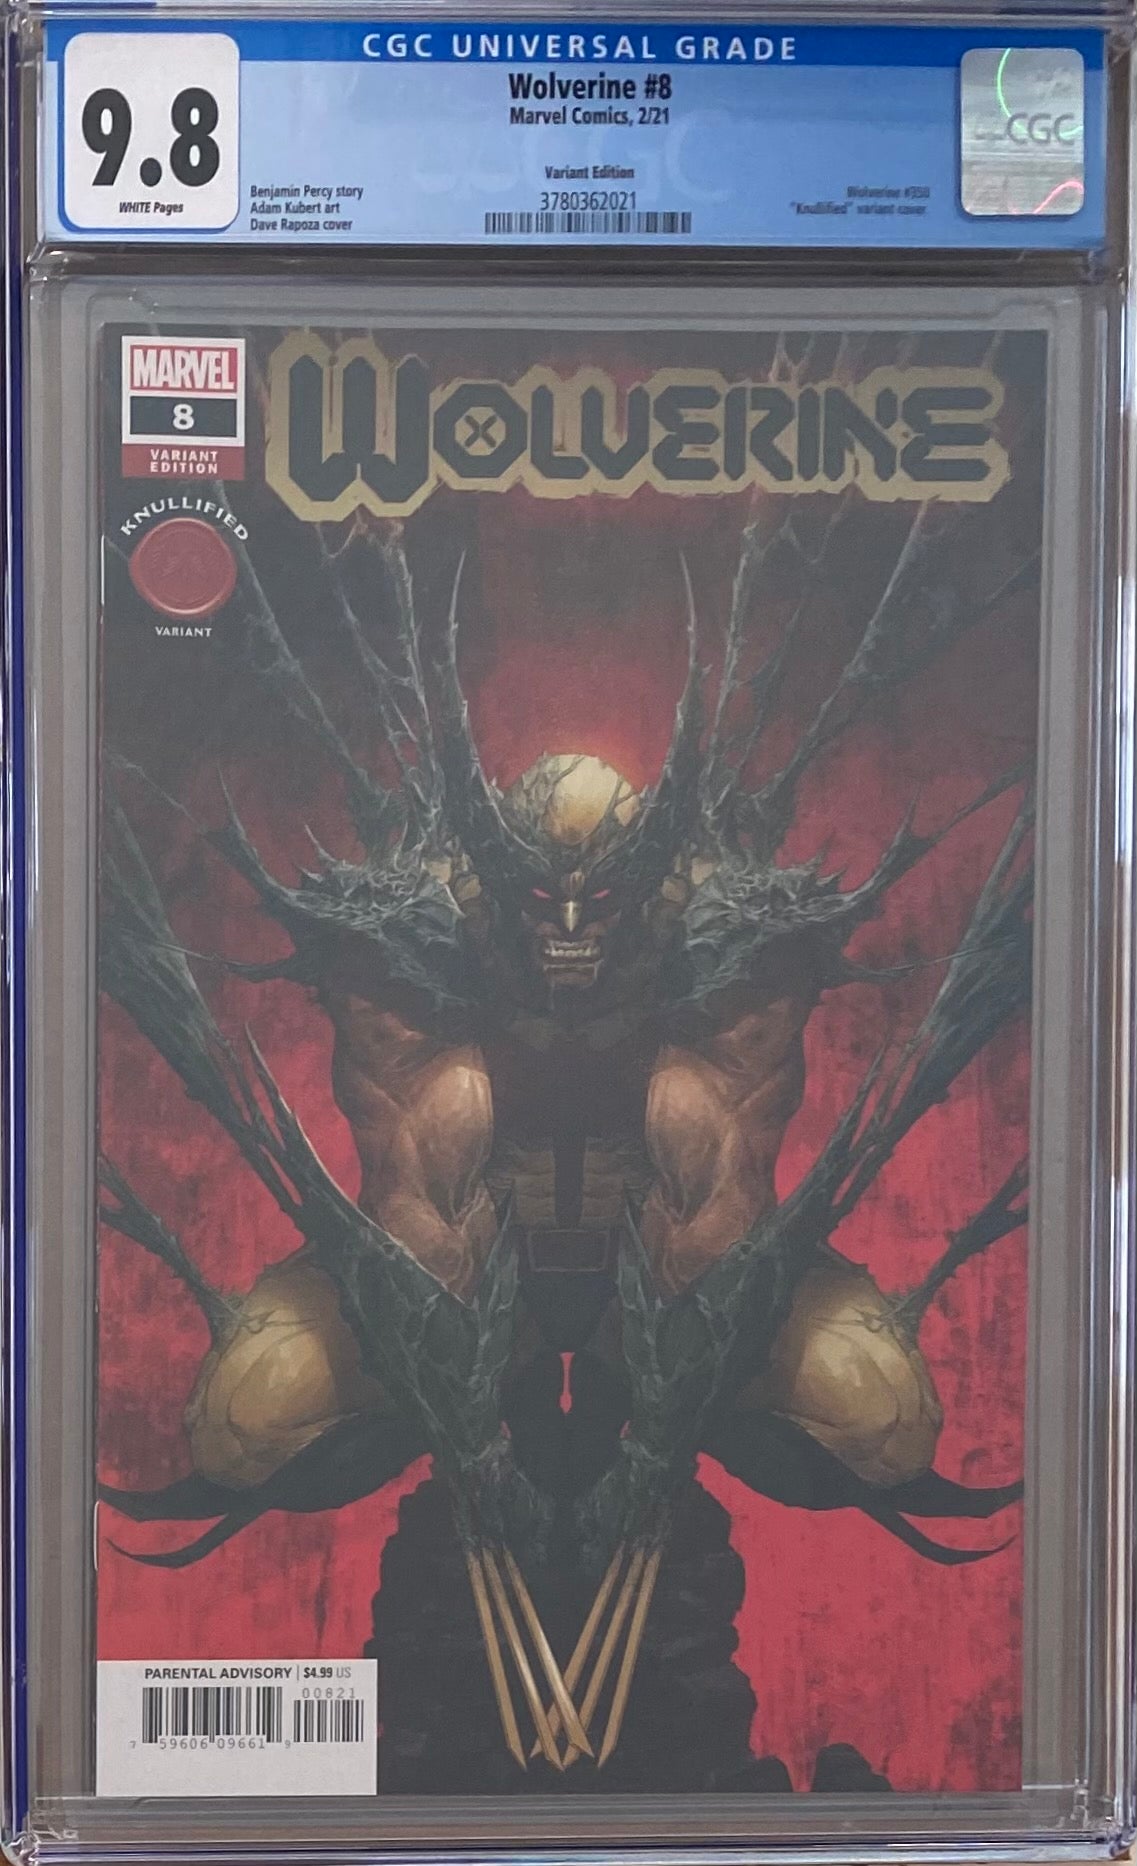 Wolverine #8 (#350) "Knullified" Variant CGC 9.8